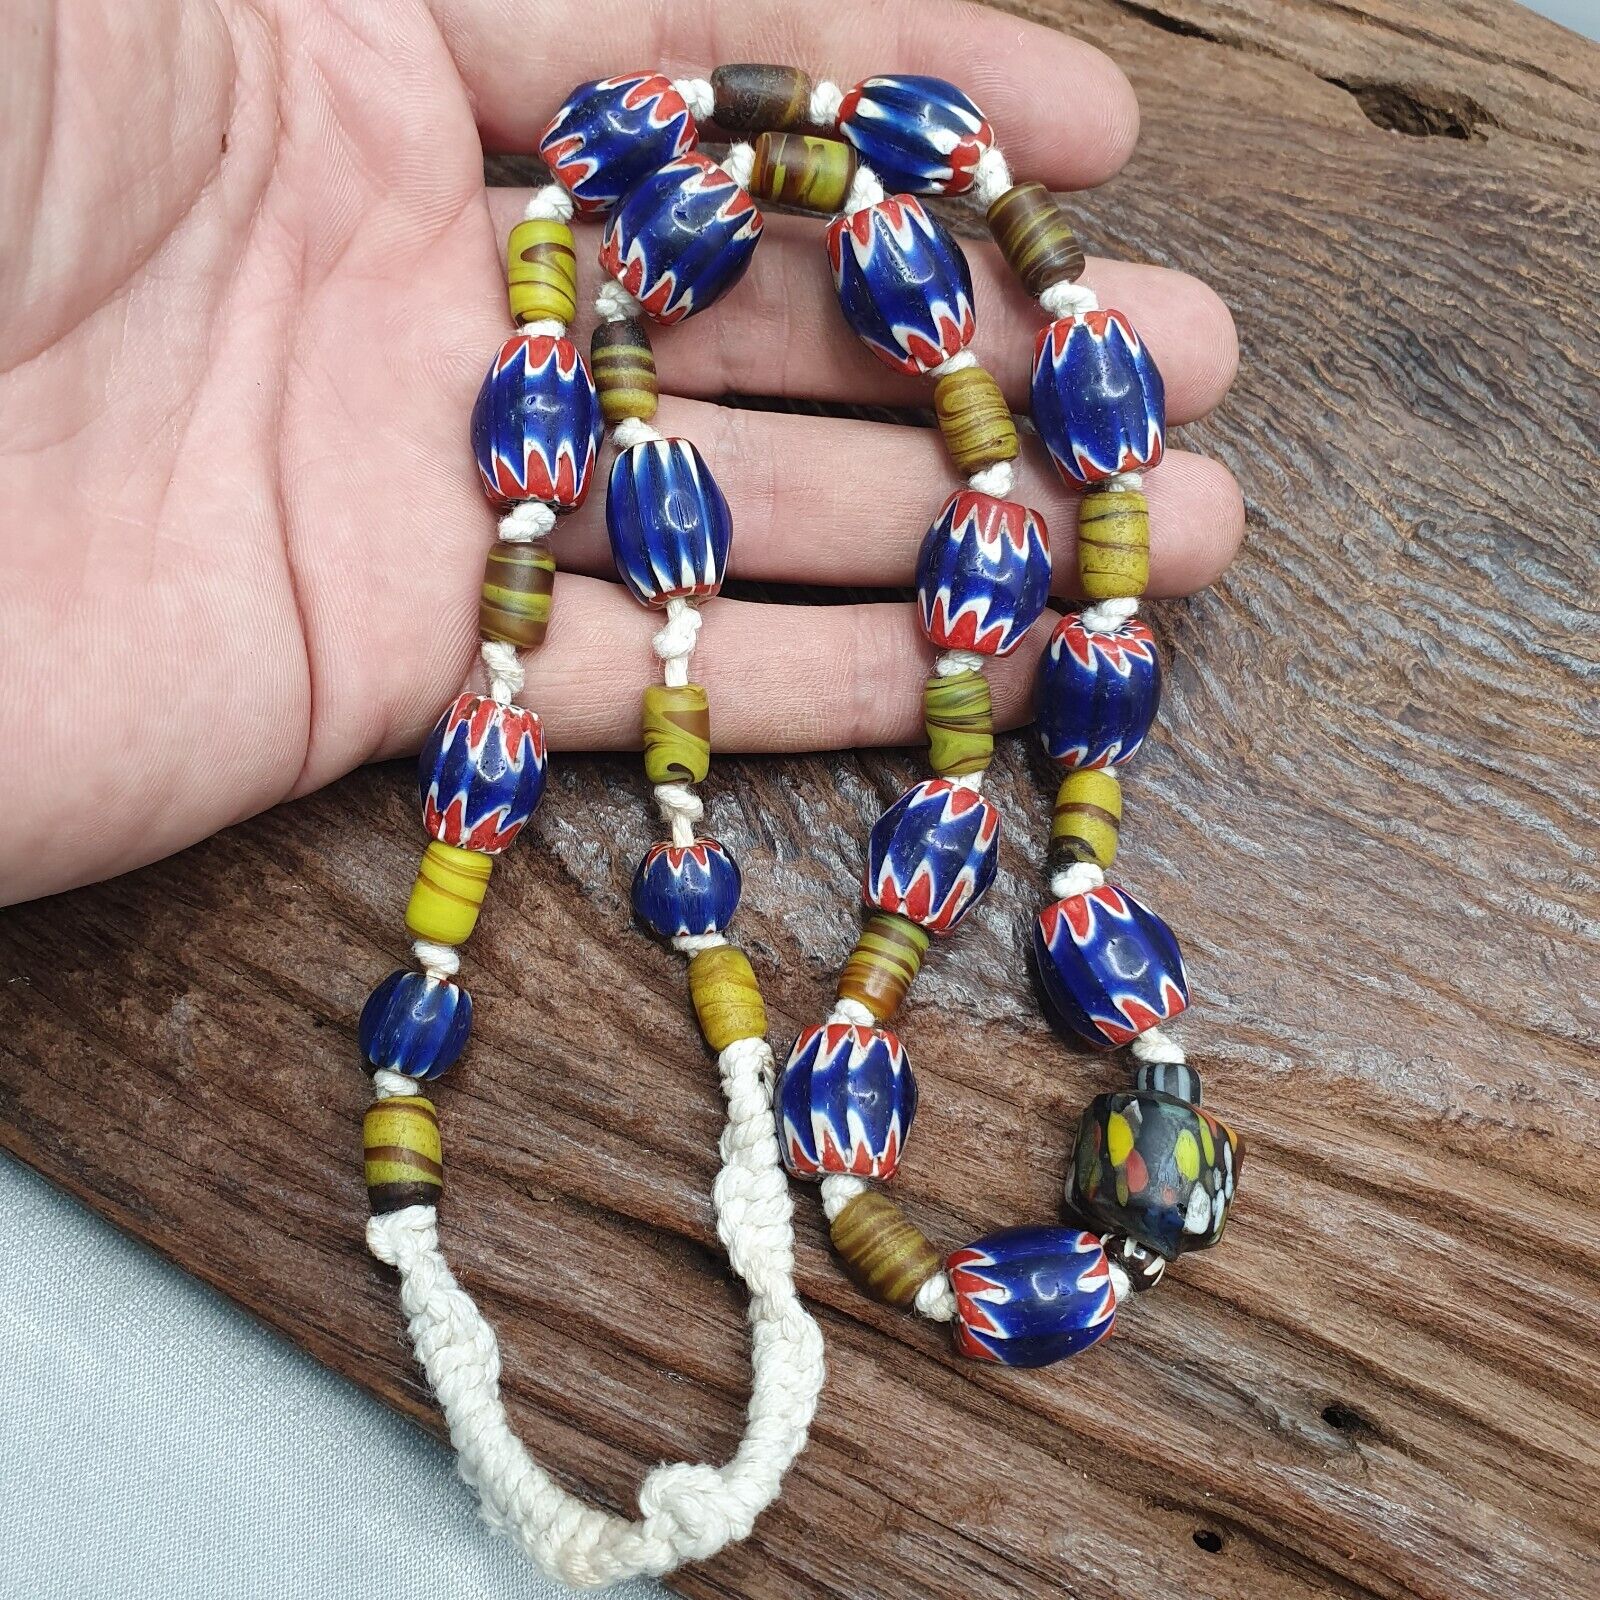 Vintage Venetian Style Blue Chevron beads Necklace #CH-3